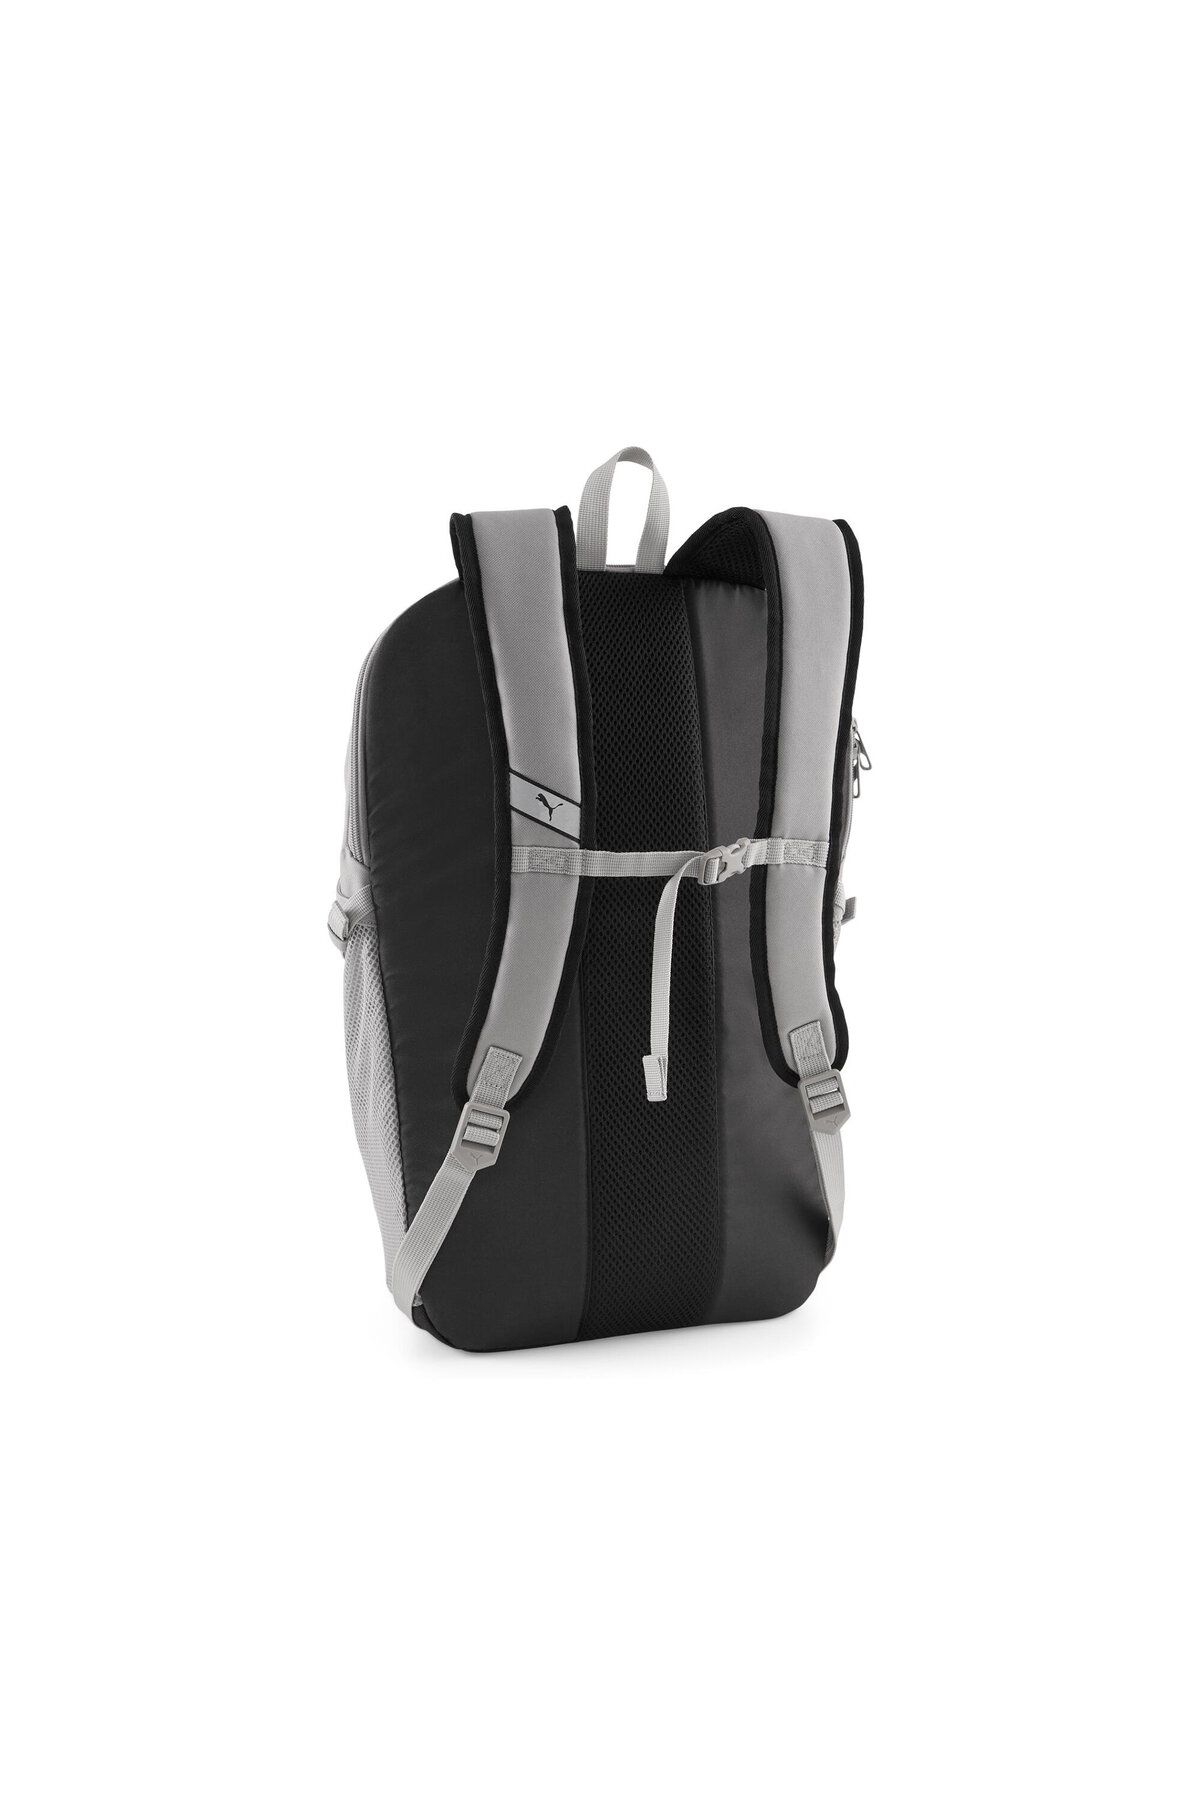 Puma Versatile Middle School High School Daily Backpack Sports Trendyol School Plus Backpack - Rucksack And Pro